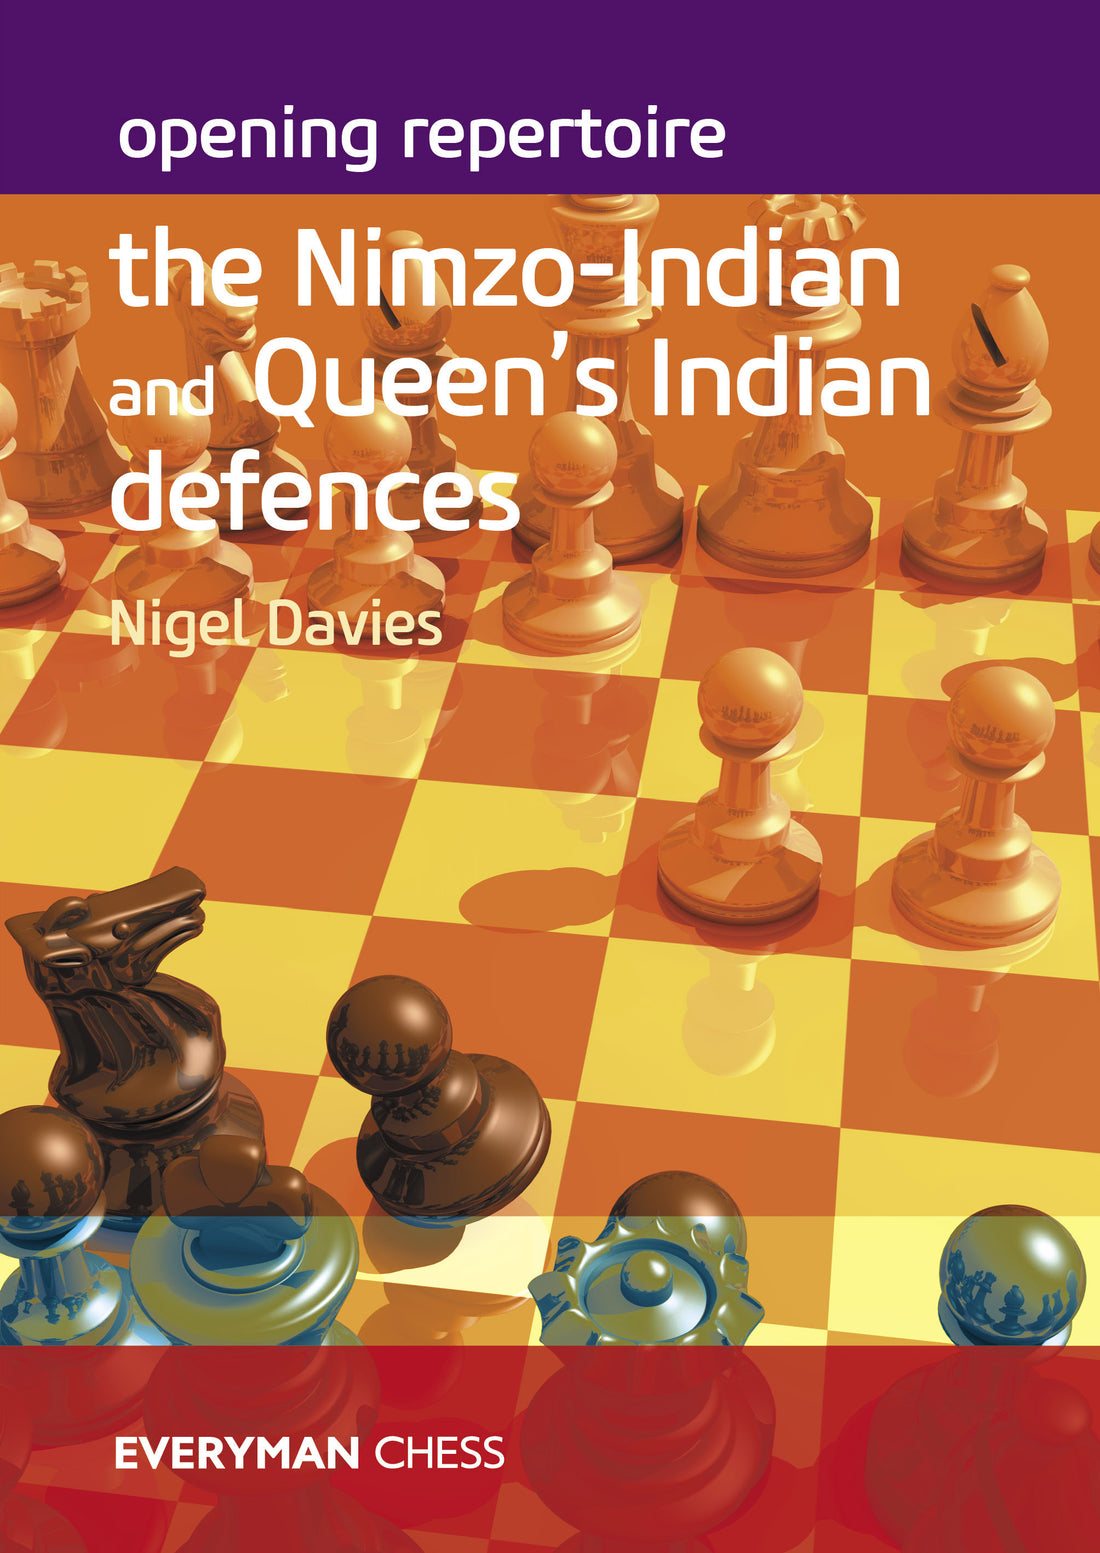 Chess Opening Basics: The Bogo-Indian Defense - Chessable Blog